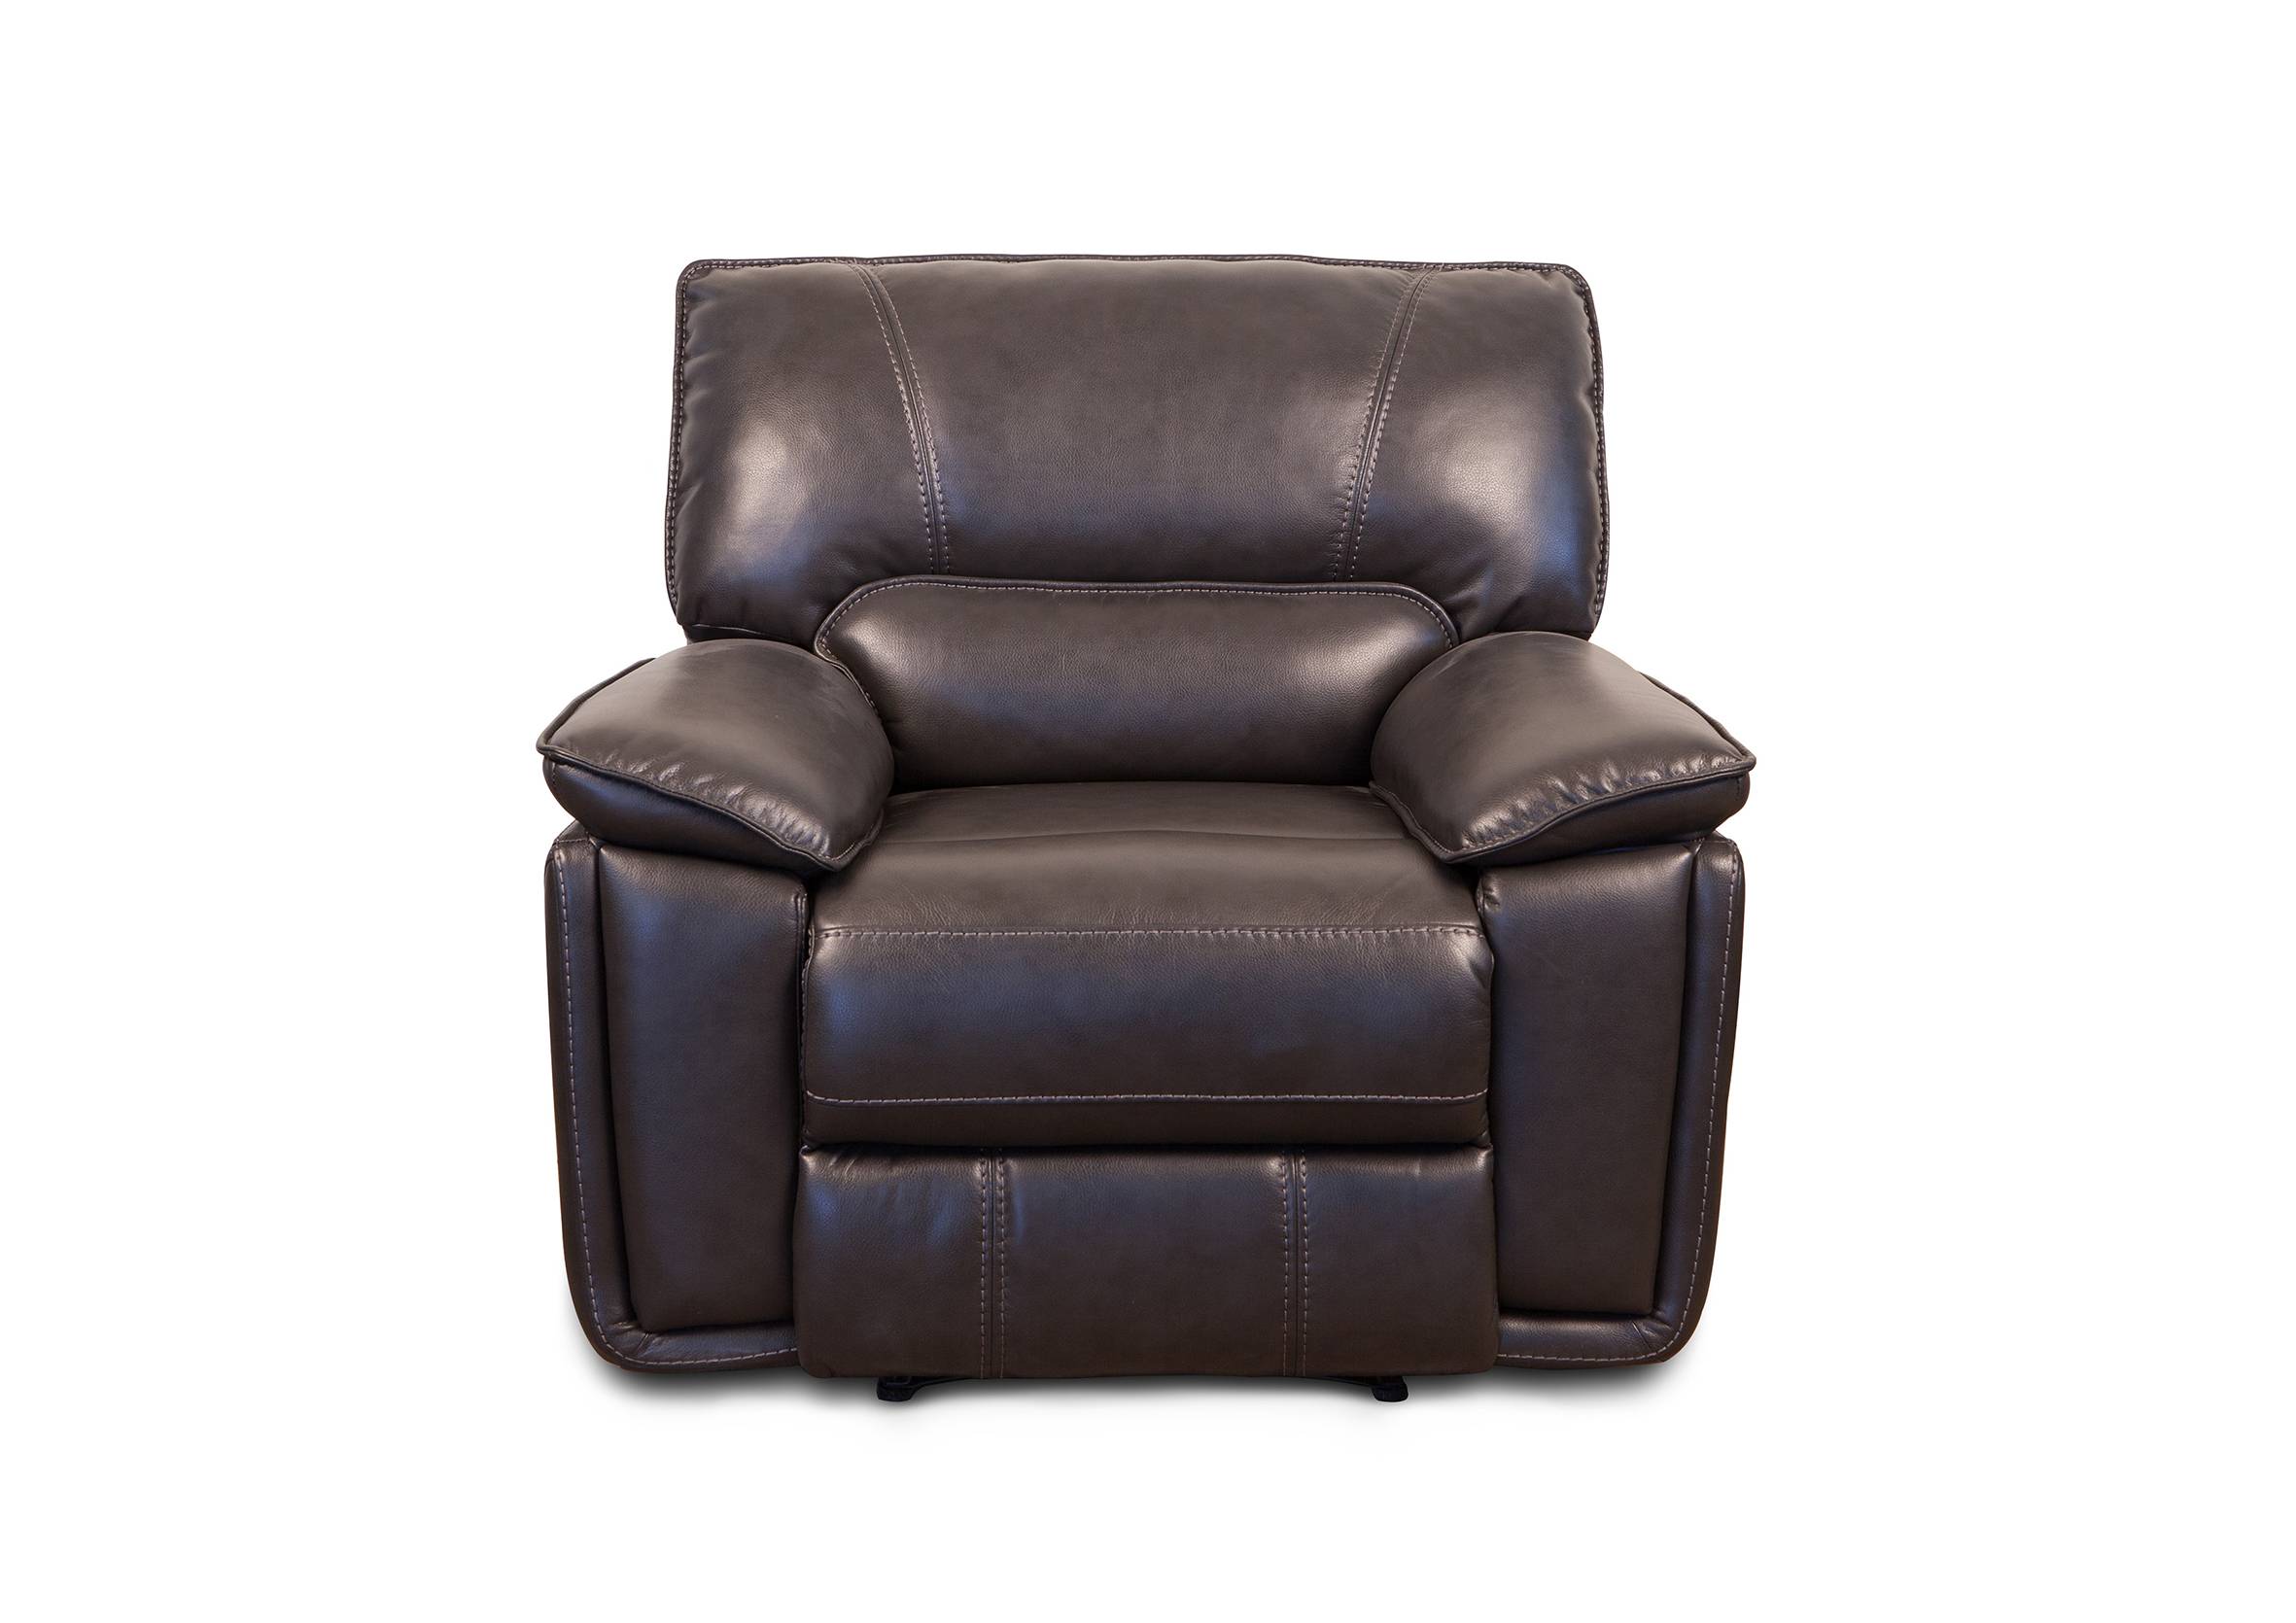 Luxury leather sofa set 1 2 3 massage zero gravity recliner